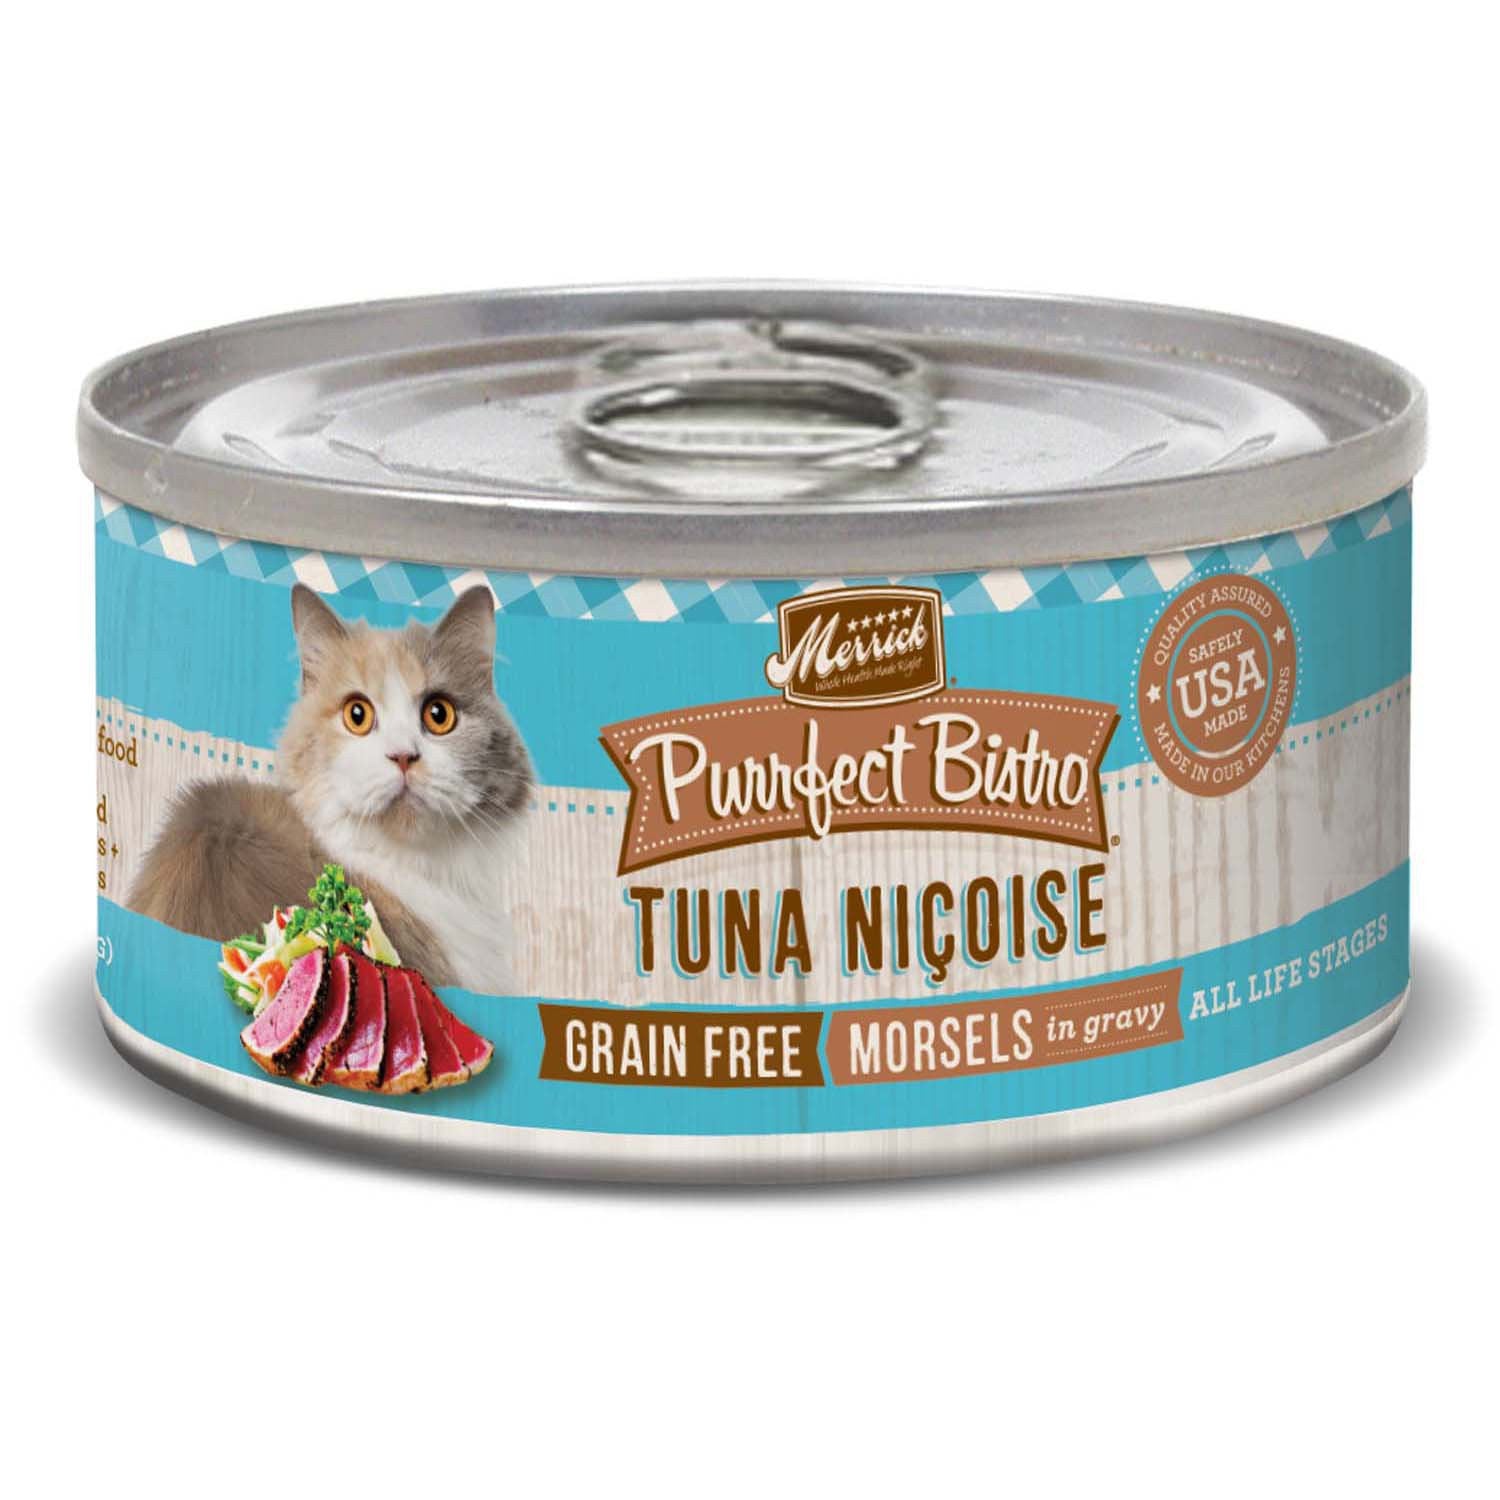 Merrick Purrfect Bistro Tuna Nicoise Canned Cat Food (5.5oz/156g)